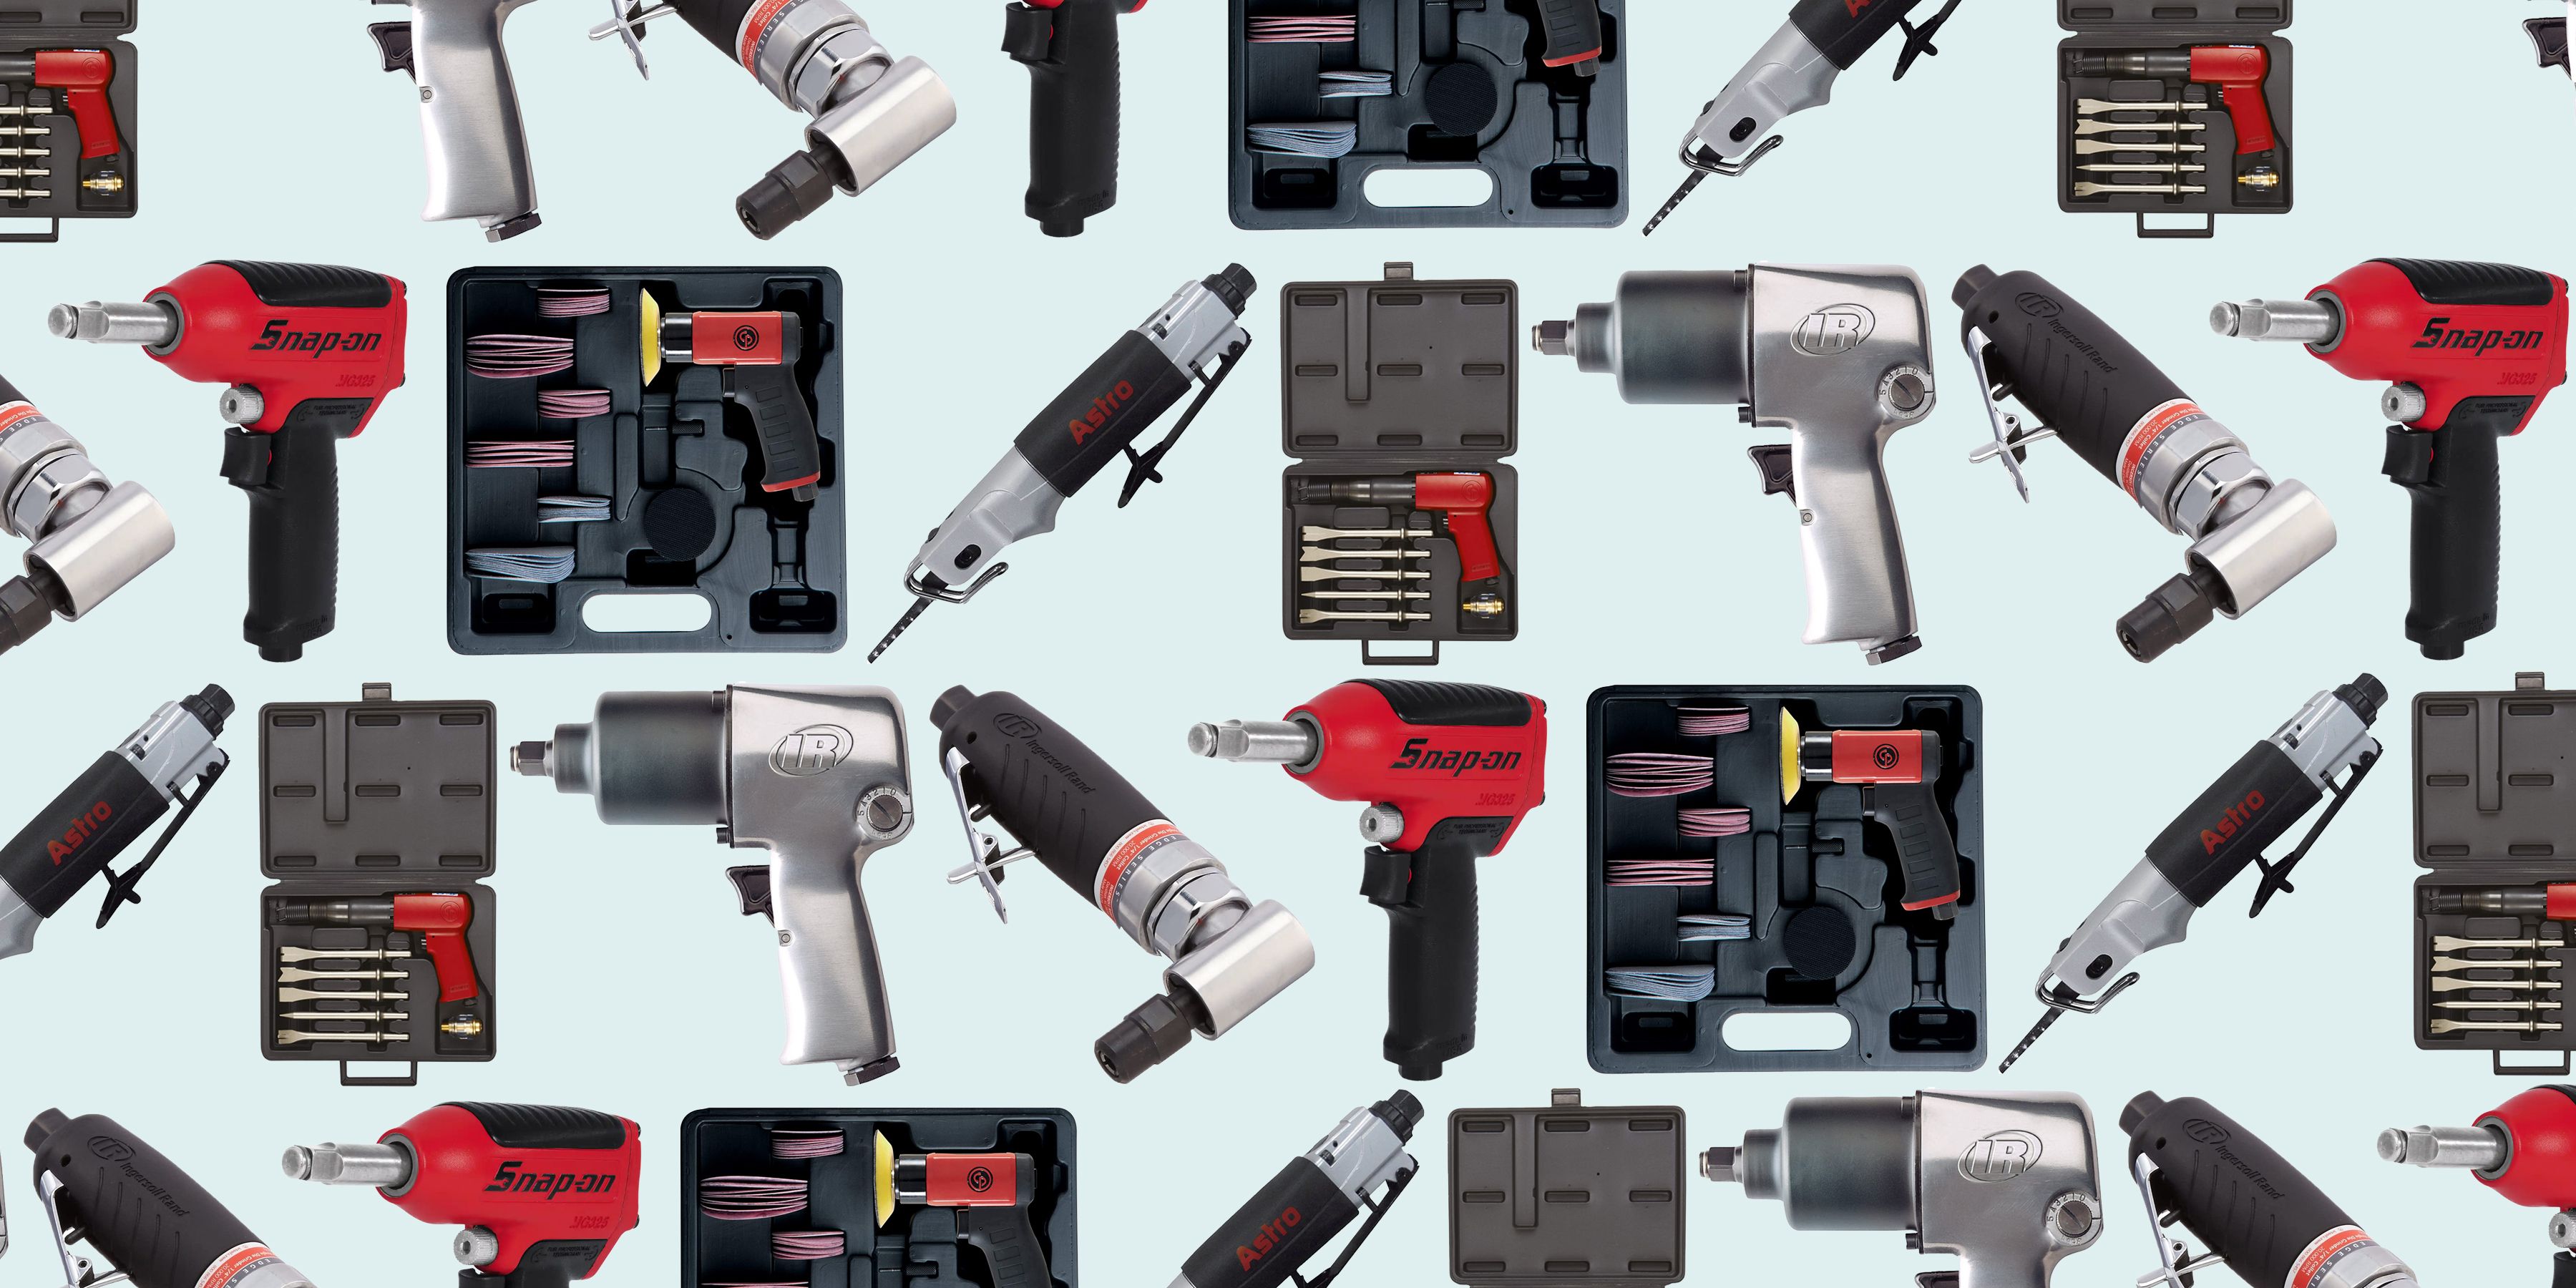 38 Pc Automotive Shop Pneumatic Air Tool Set Drill Wrench Ratchet Sander Grinder 